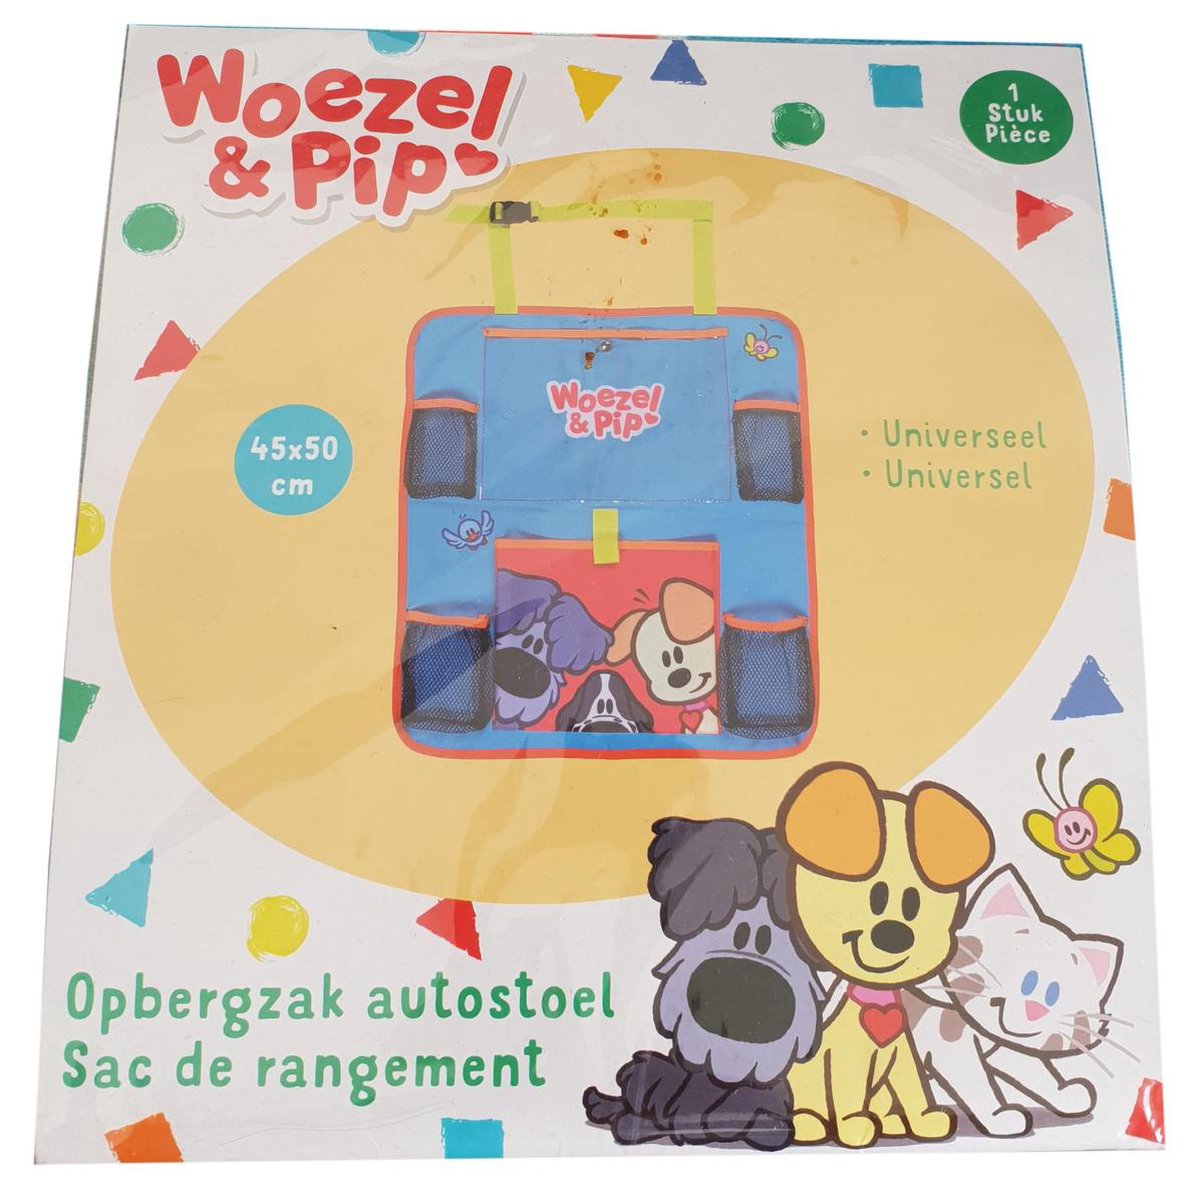 Woezel & Pip opbergzak autostoel - Auto organizer | bol.com